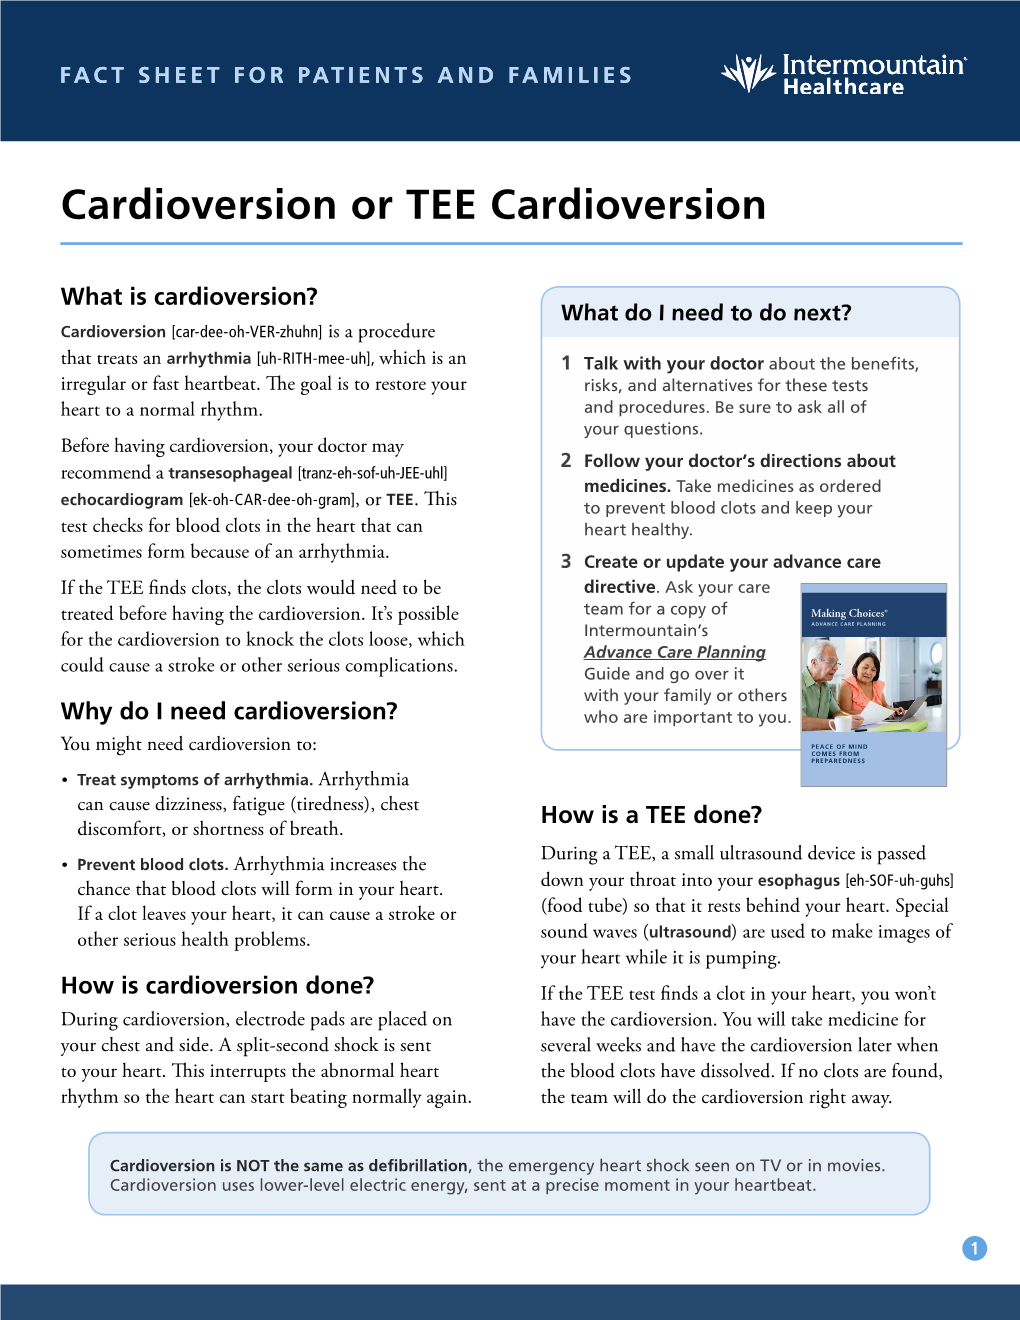 TEE Cardioversion